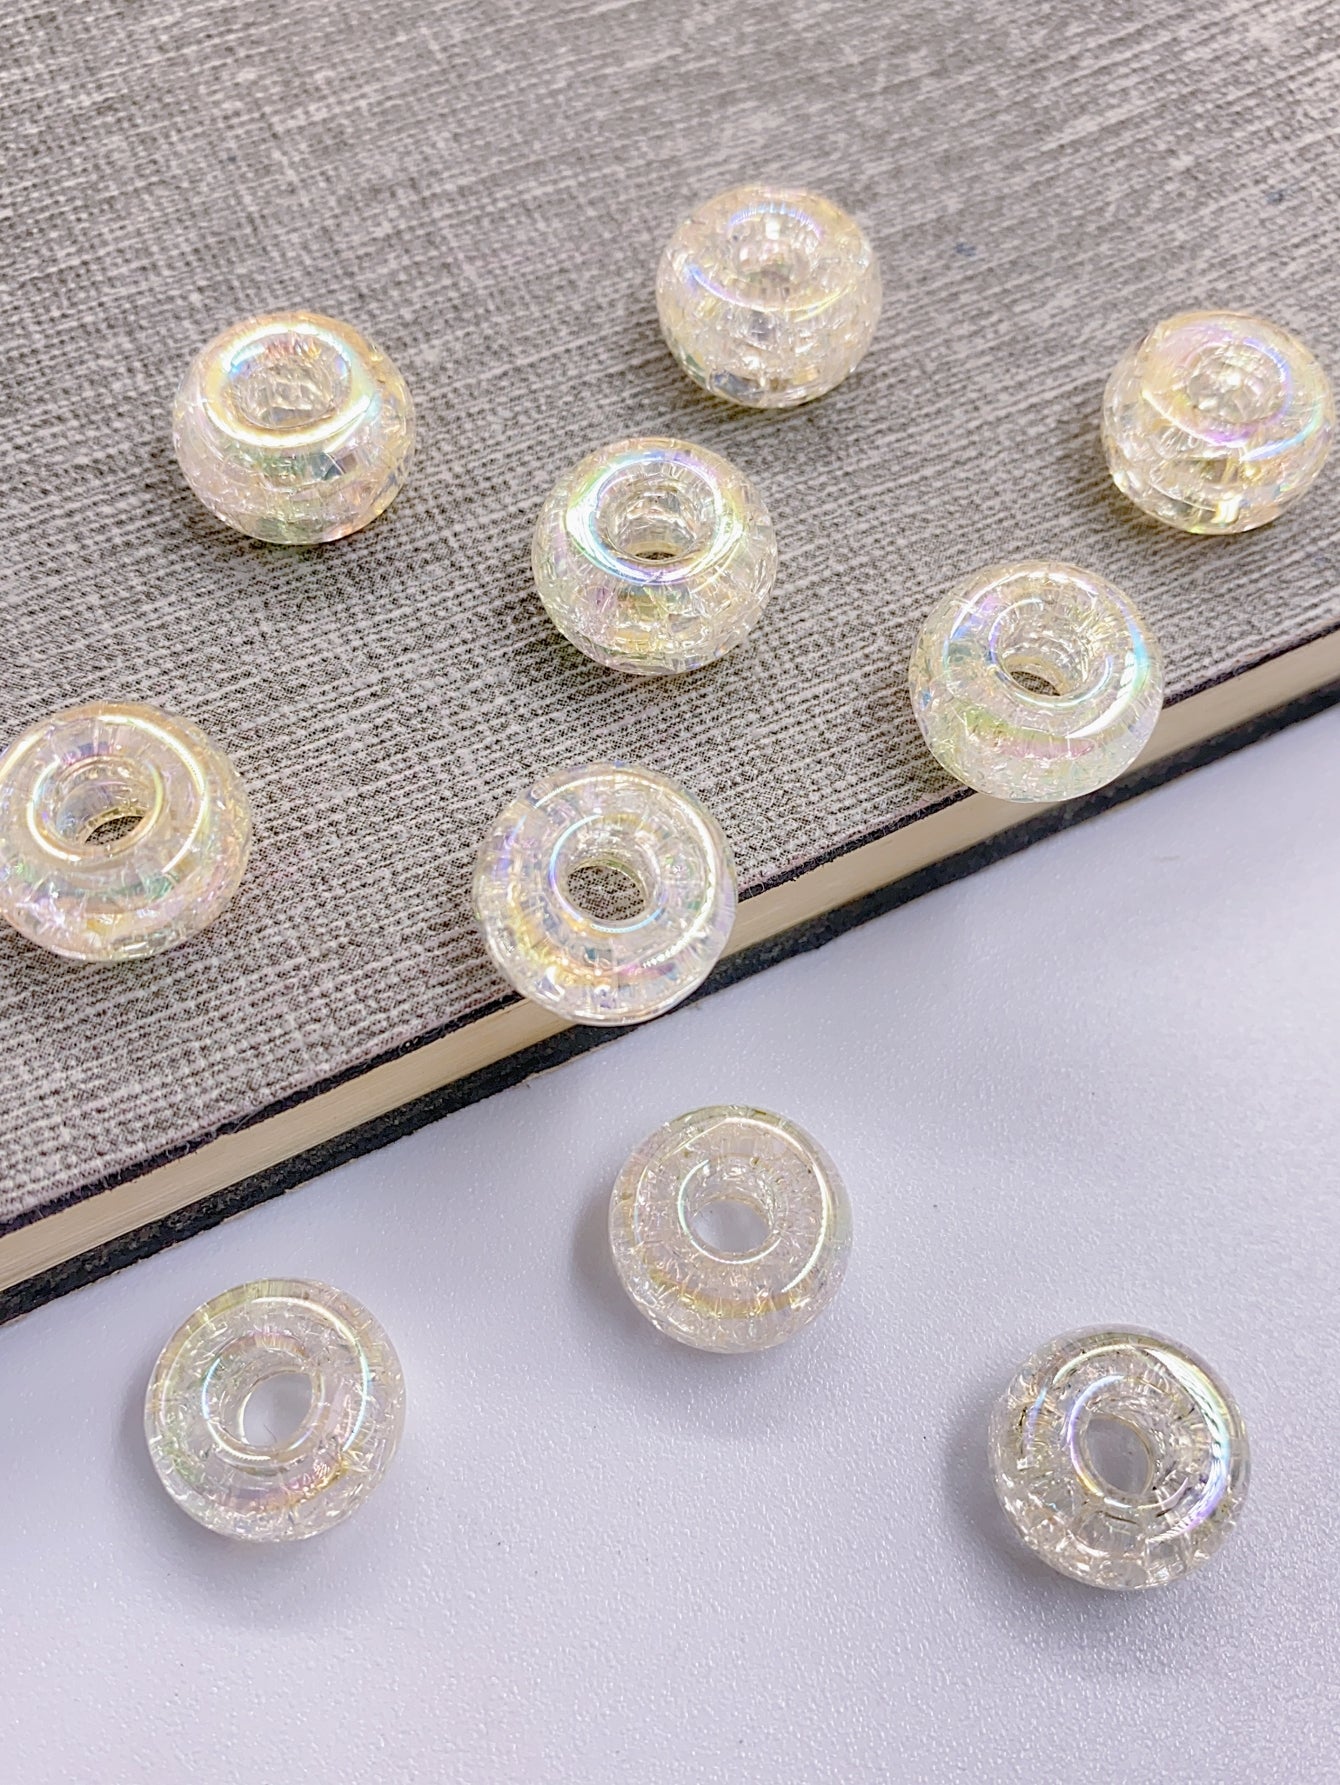 abs imitation pearl Mermaid Crack series acrylic wheel bead flat bead colored loose bead pendant necklace wearing bead jewelry